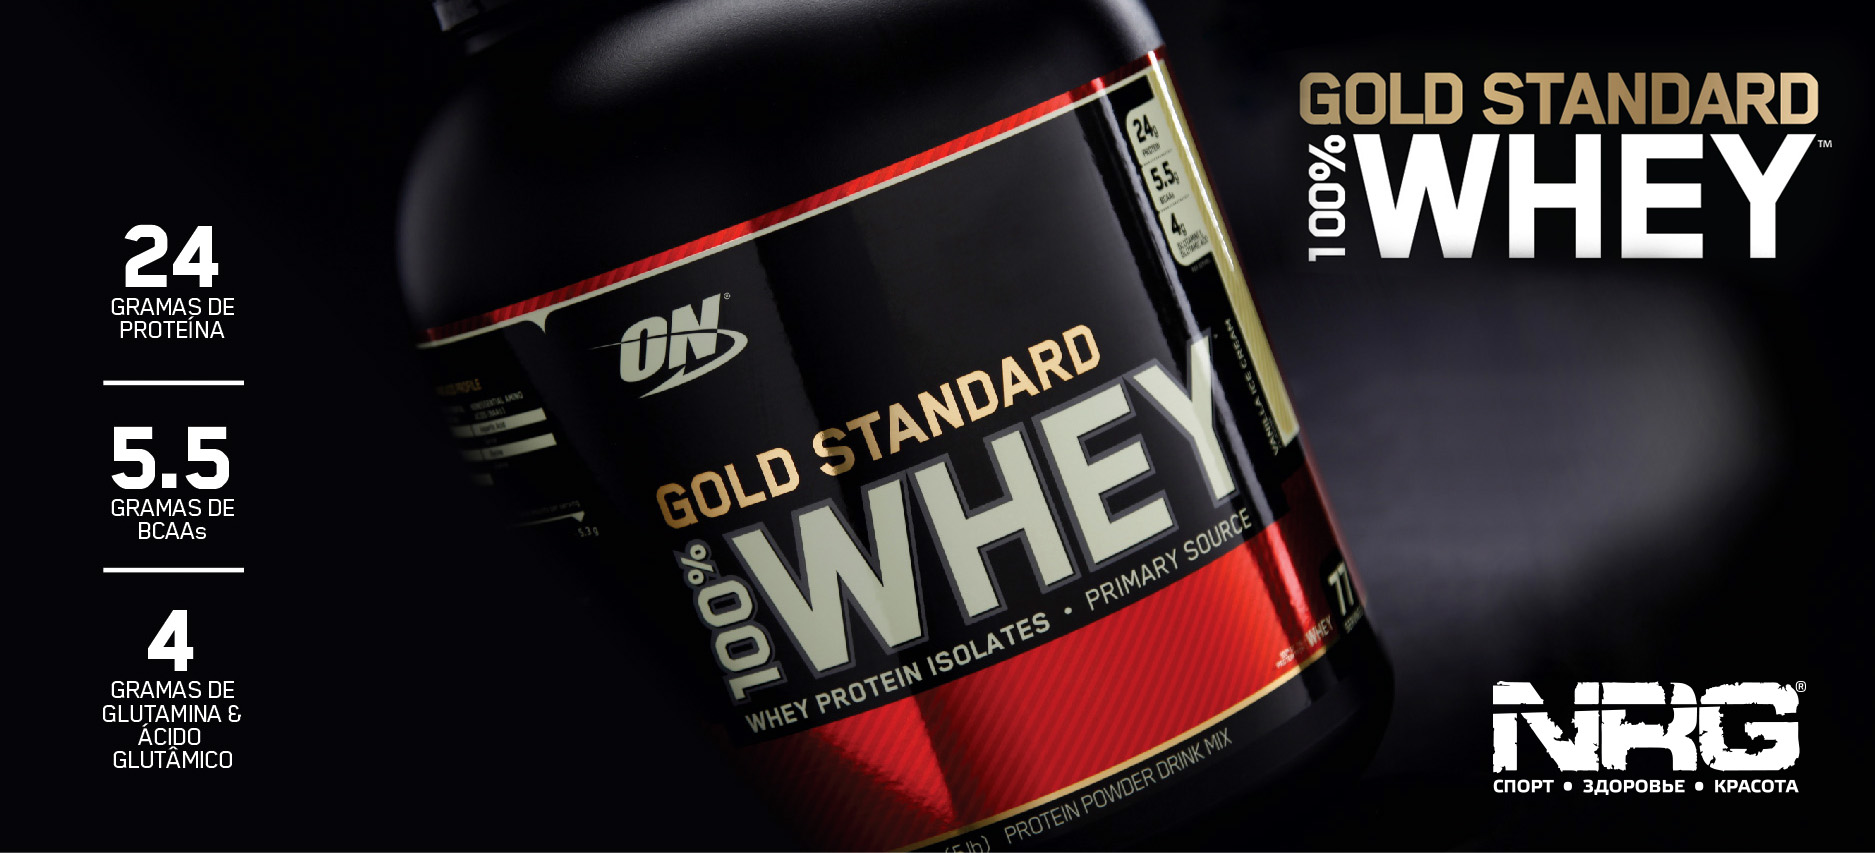 100 whey gold standard от Optimum Nutrition